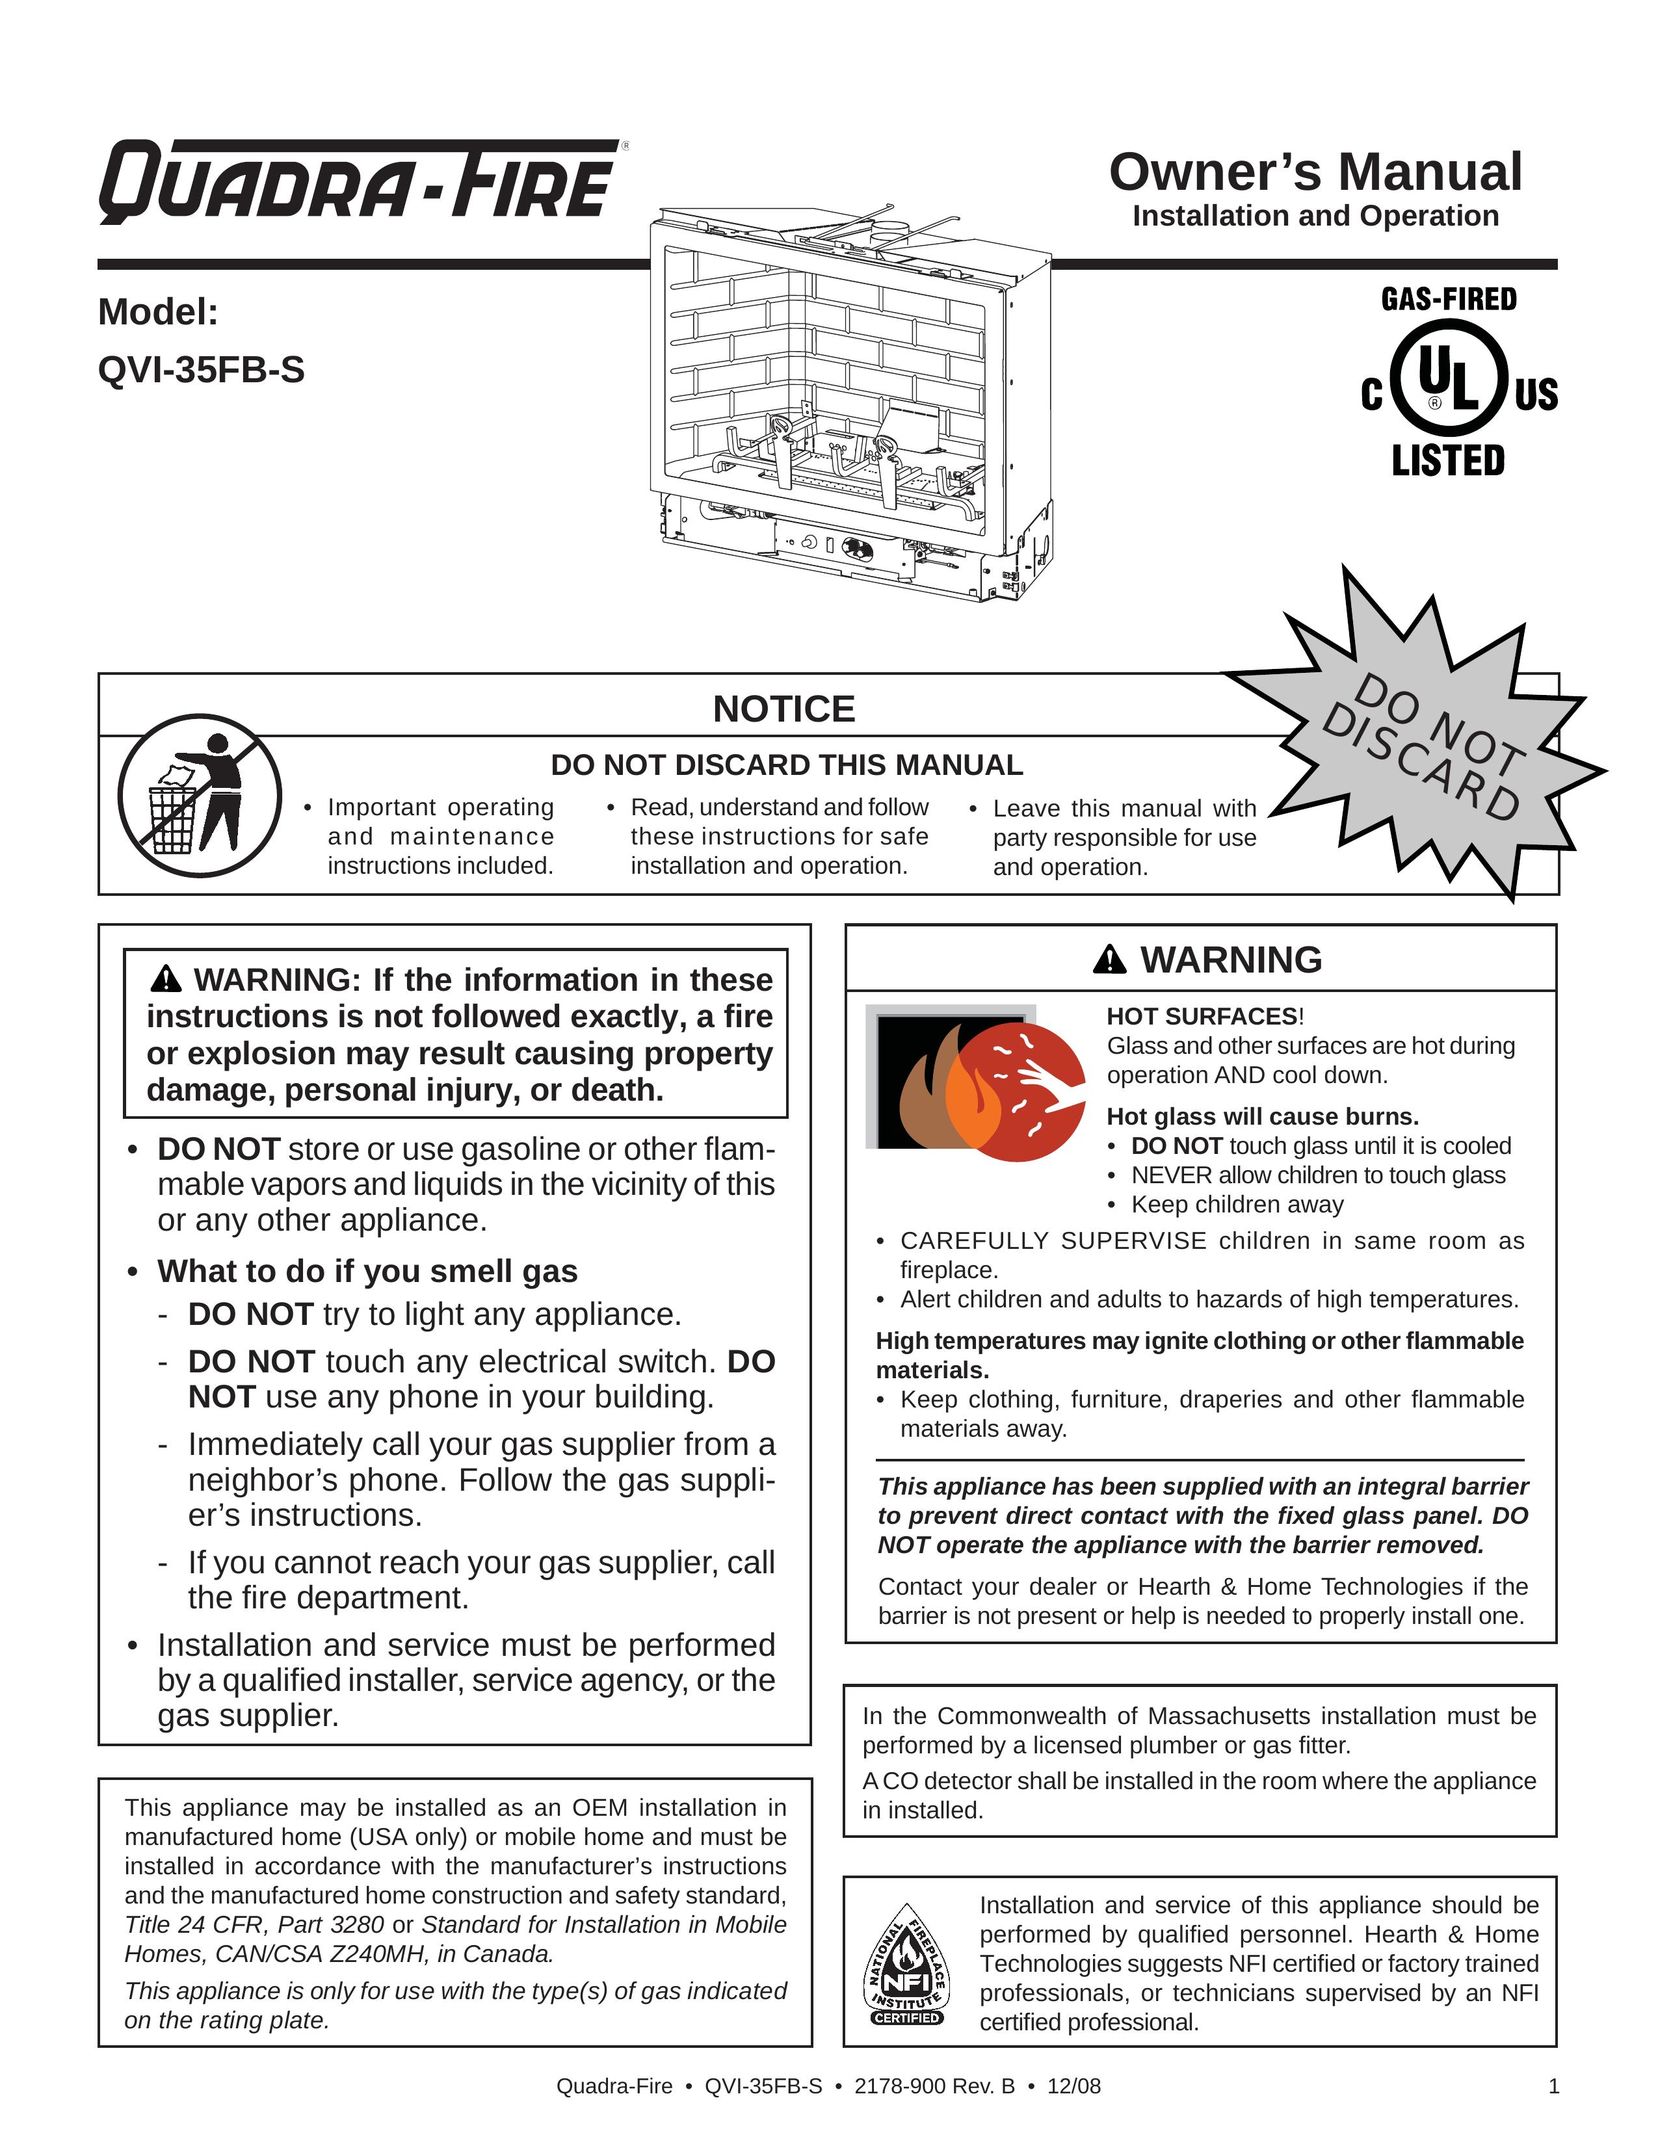 Quadra-Fire QVI-35FB-S Indoor Fireplace User Manual